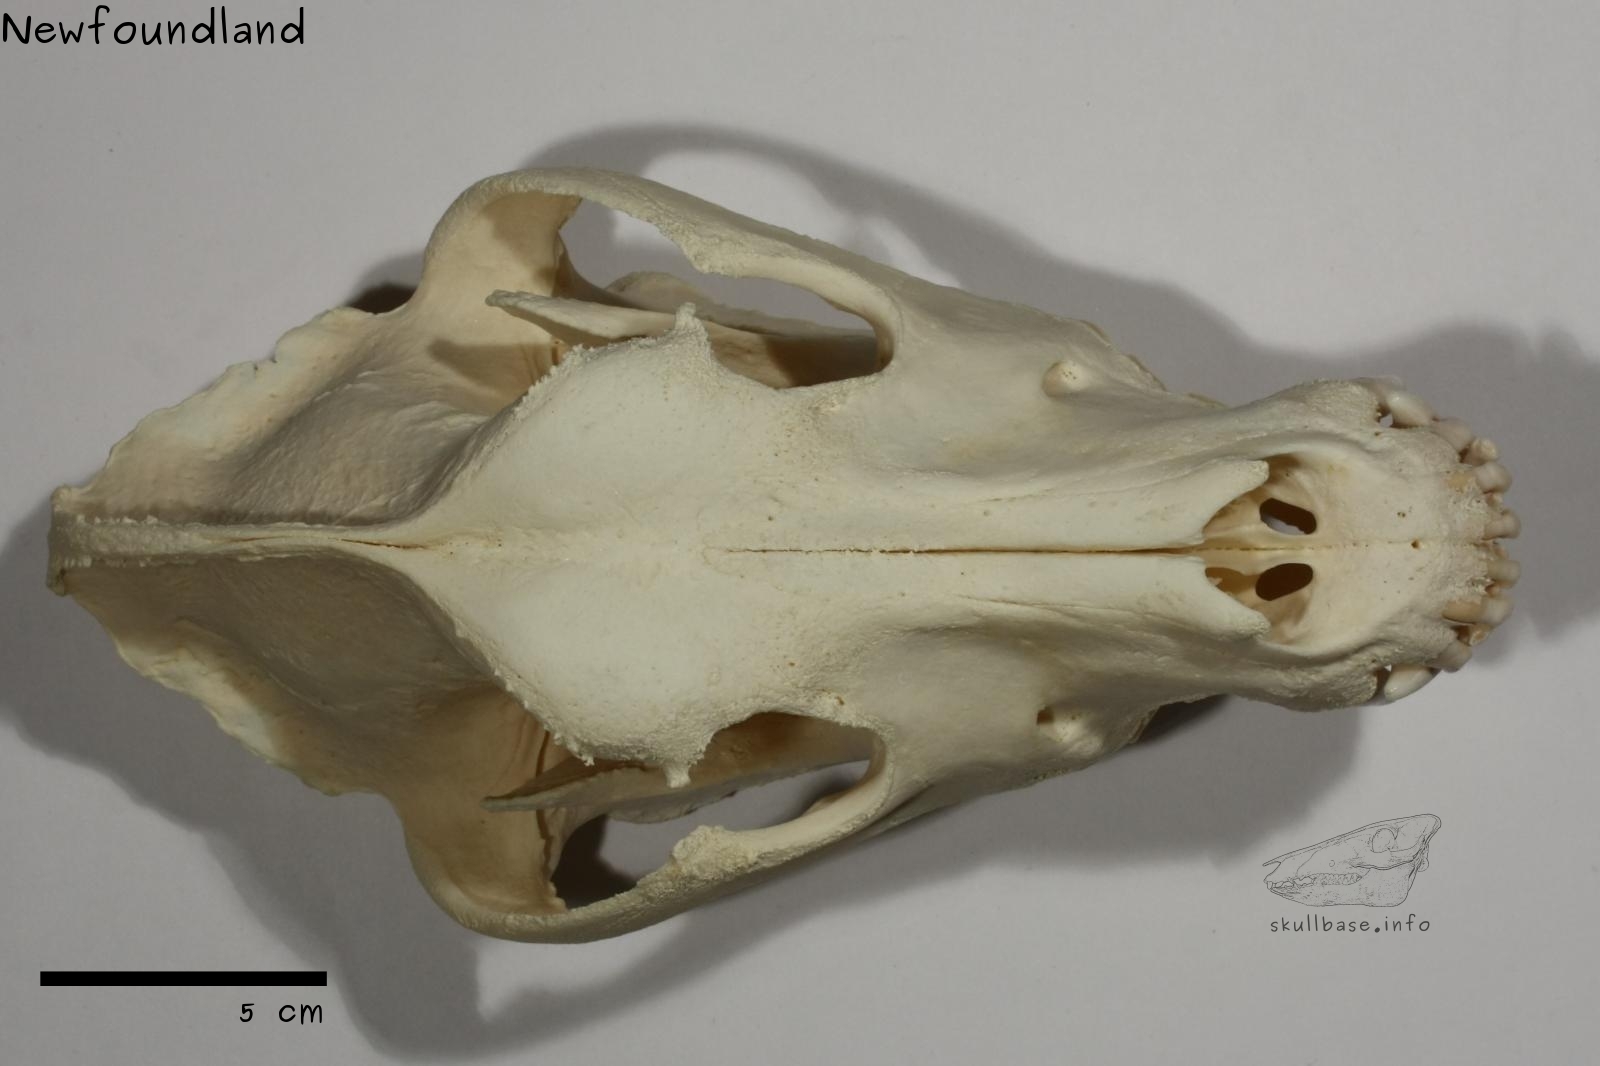 Newfoundland (Canis lupus familiaris) skull dorsal view